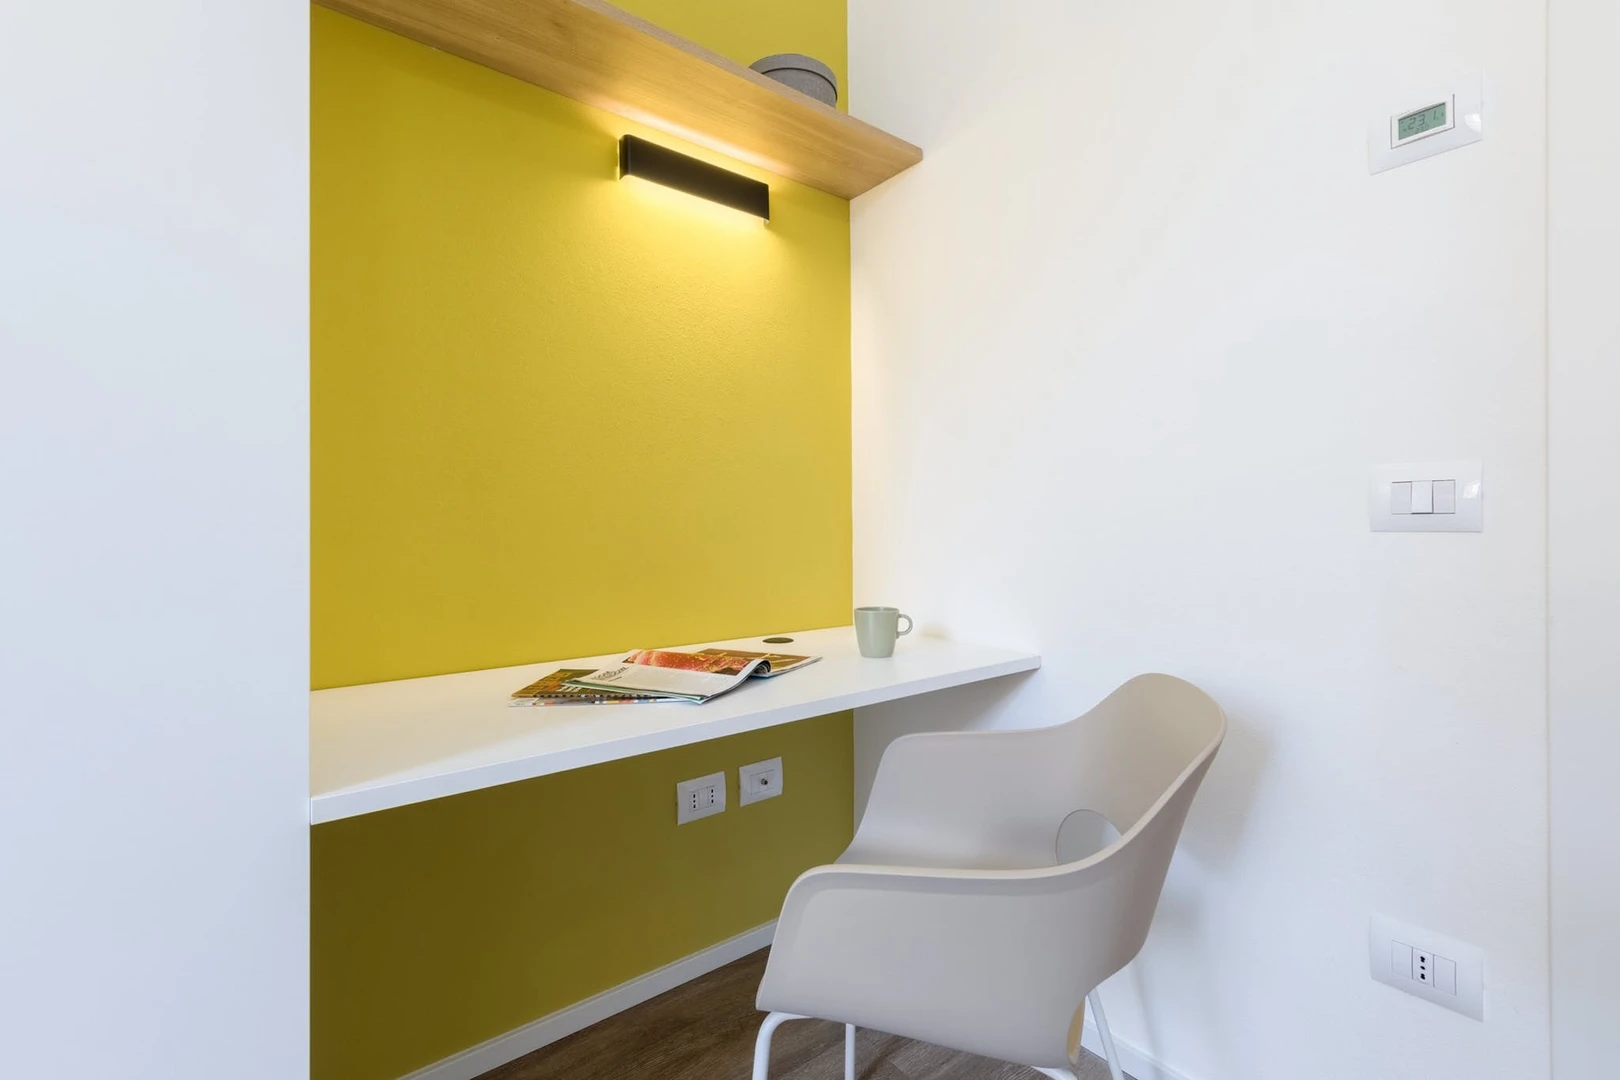 Room for rent in a shared flat in Ferrara